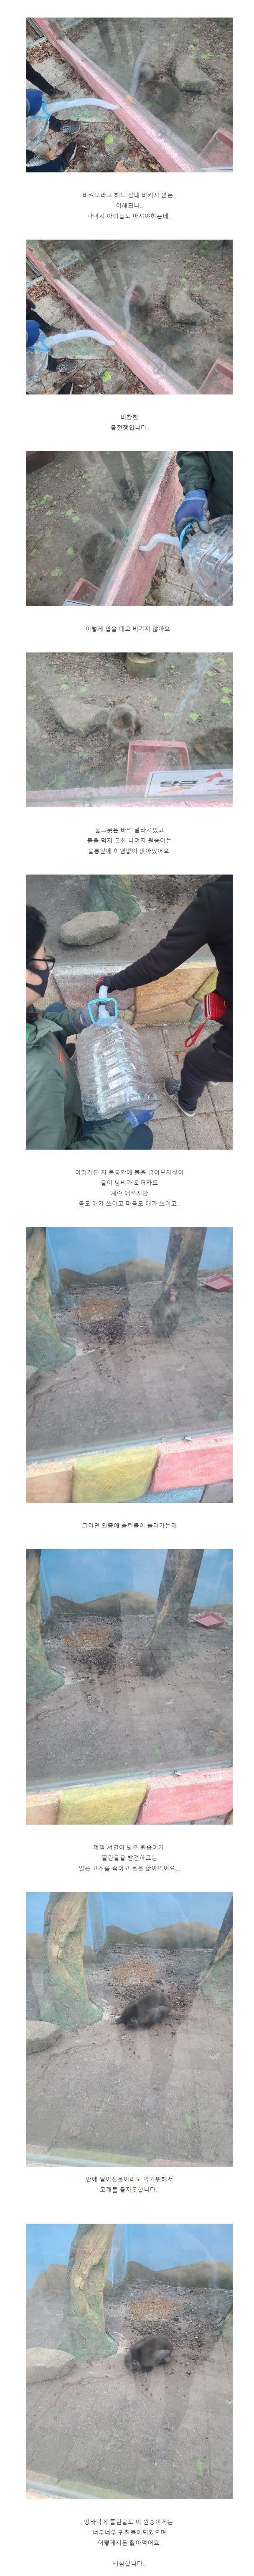 The devastating reality of a closed zoo in Daegu.